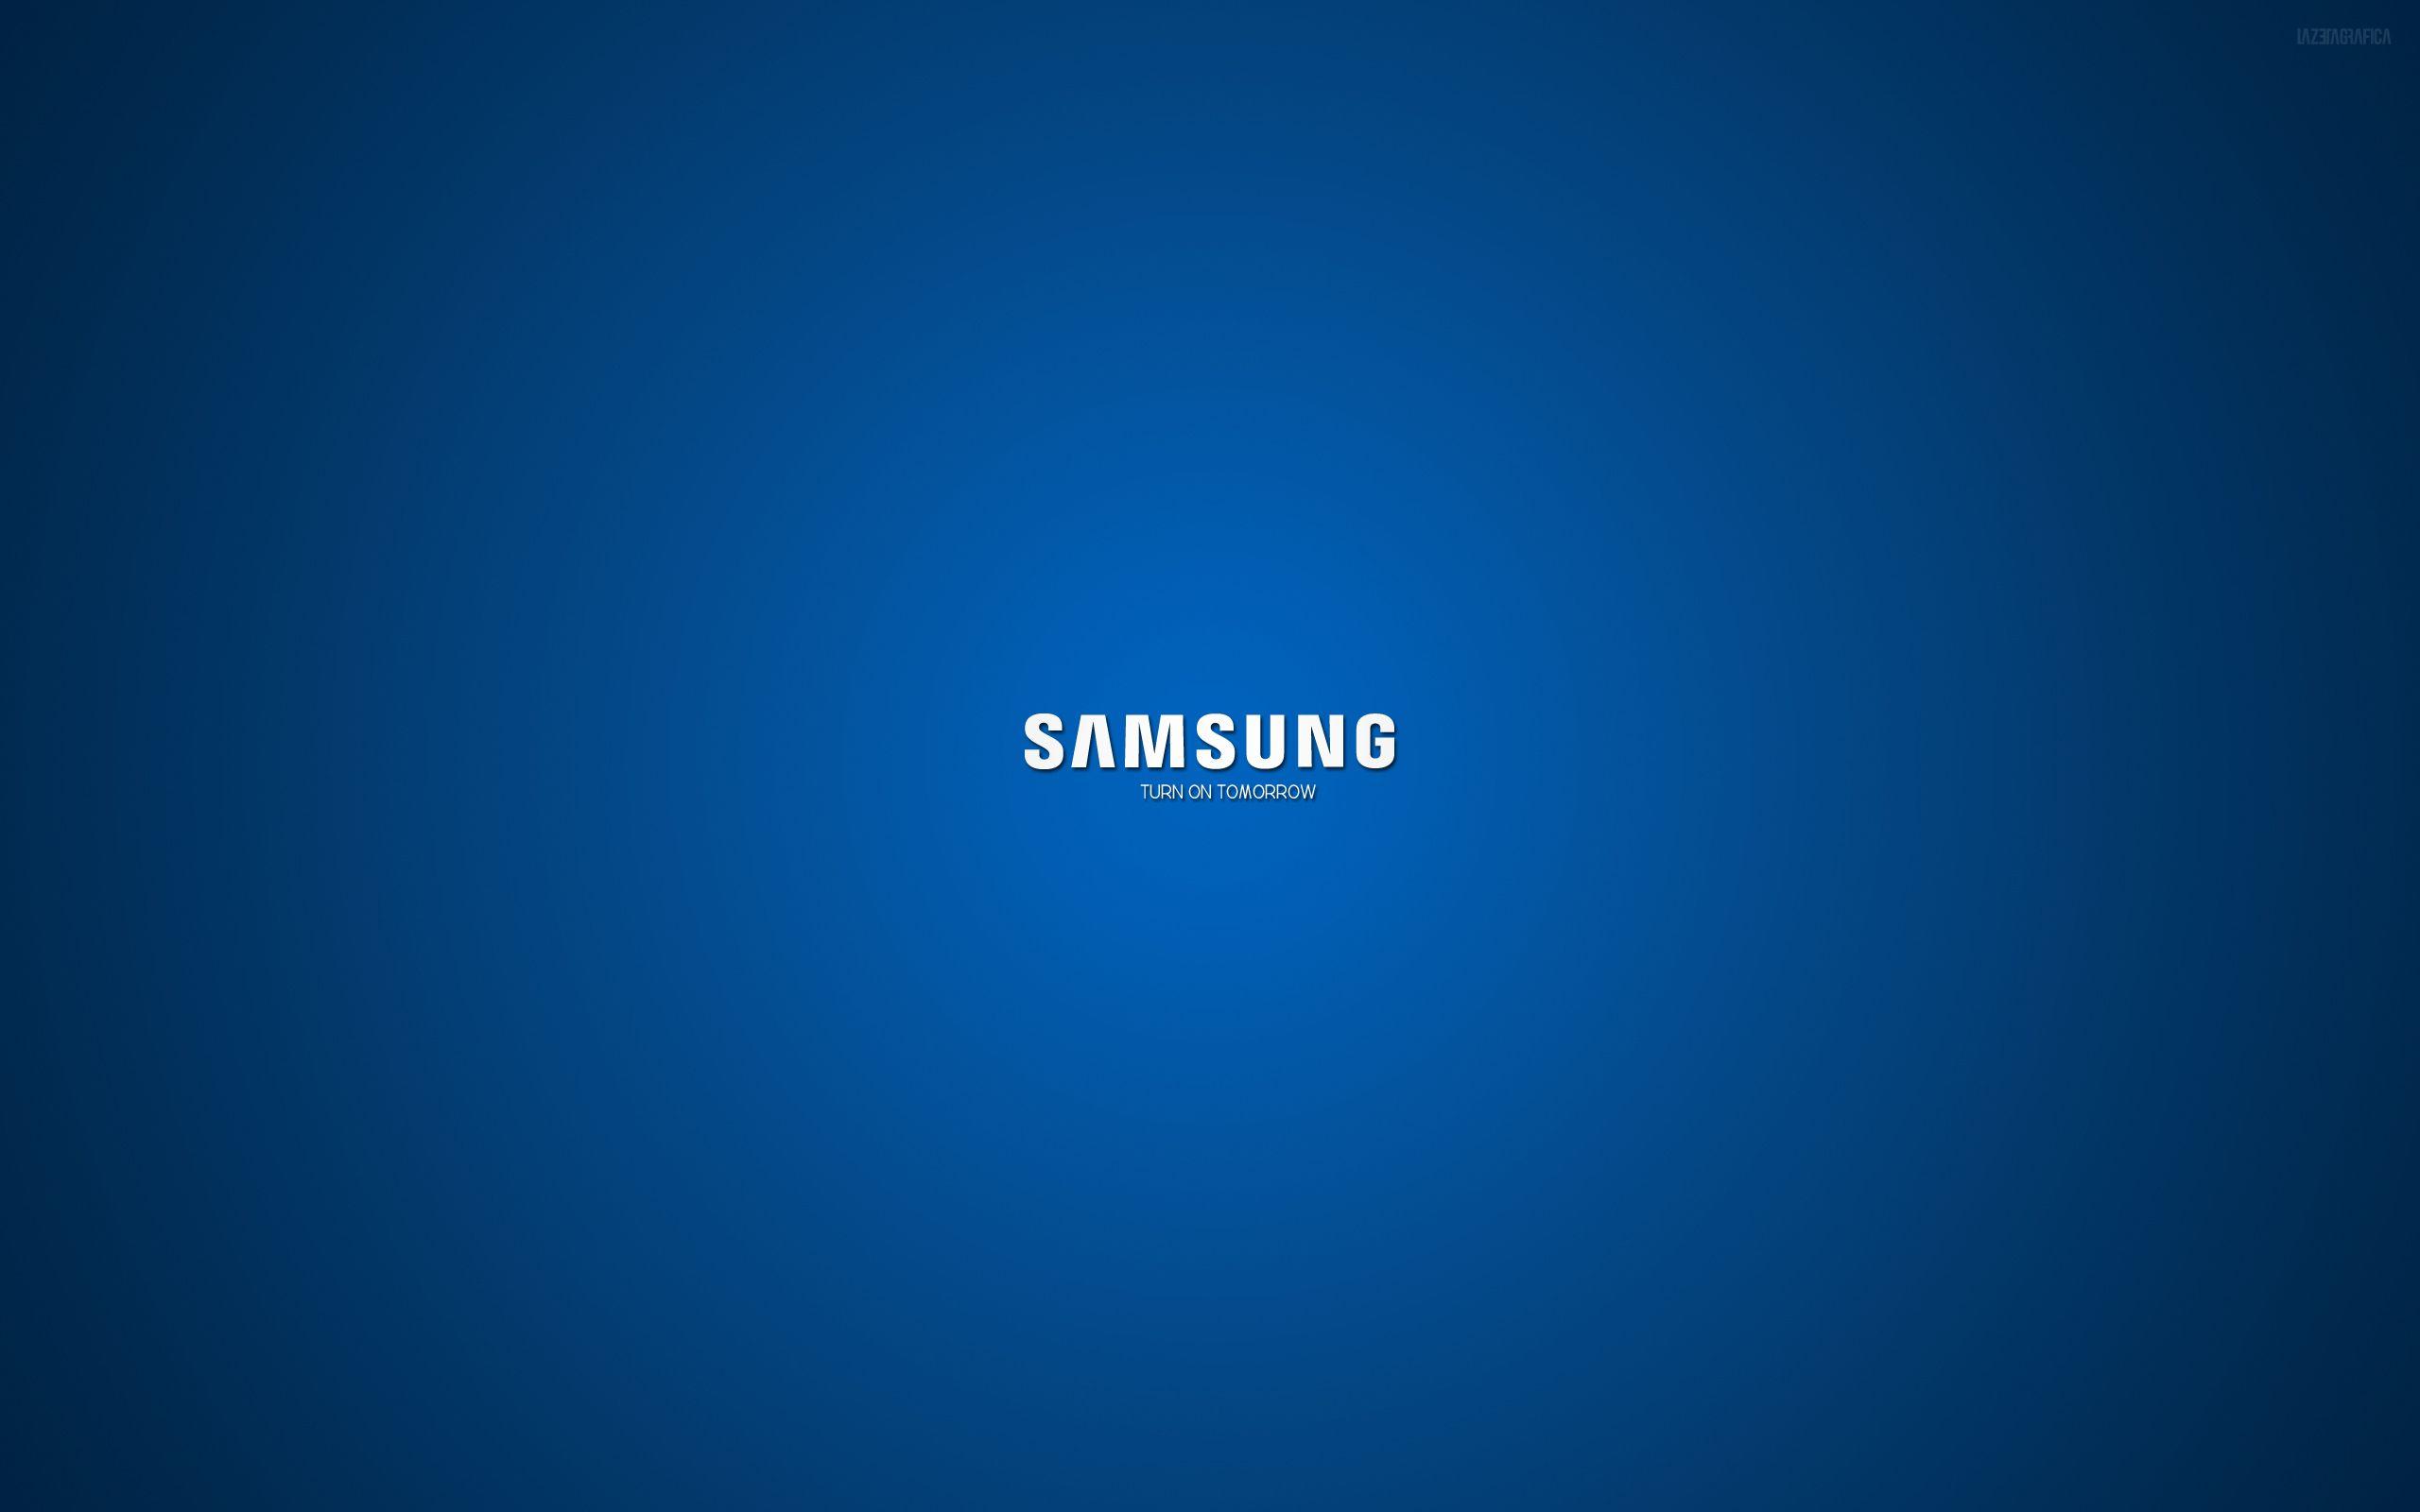 Samsung Tech Logo - Samsung LOGO (2560×1600) | Samsung | Pinterest | Samsung logo, Logos ...